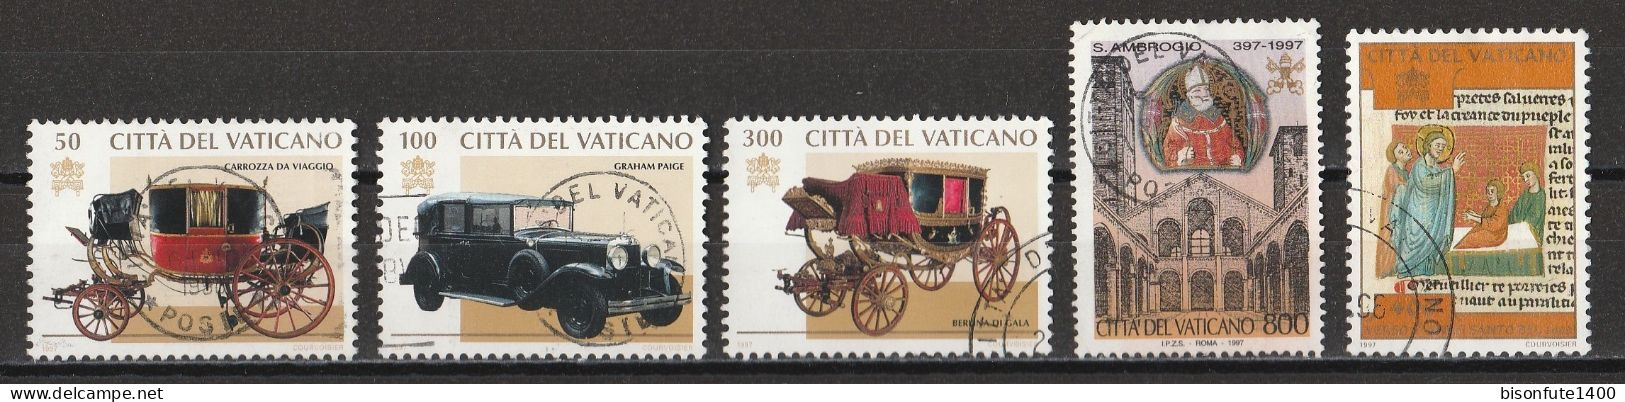 Vatican 1997 : Timbres Yvert & Tellier N° 1059 - 1060 - 1061 - 1083 - 1084 - 1089 - 1090 - 1091 - 1092 Et 1093 Oblitérés - Used Stamps